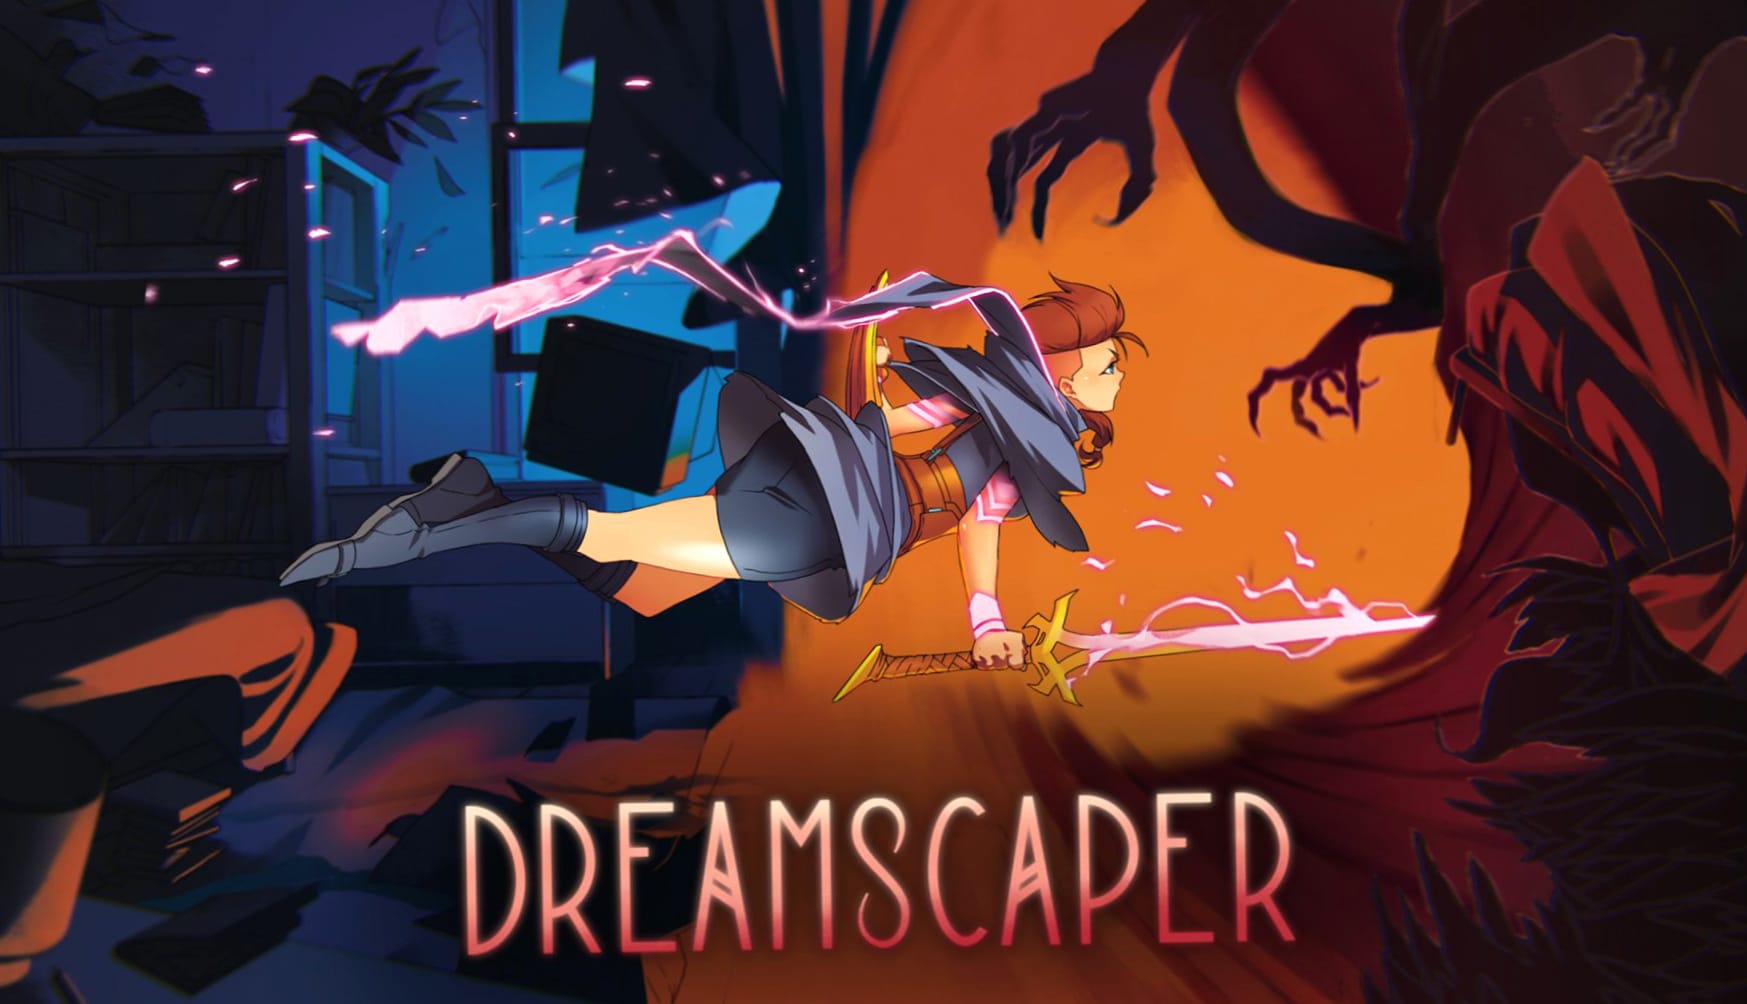 Dreamscaper at 1024 x 1024 iPad size wallpapers HD quality